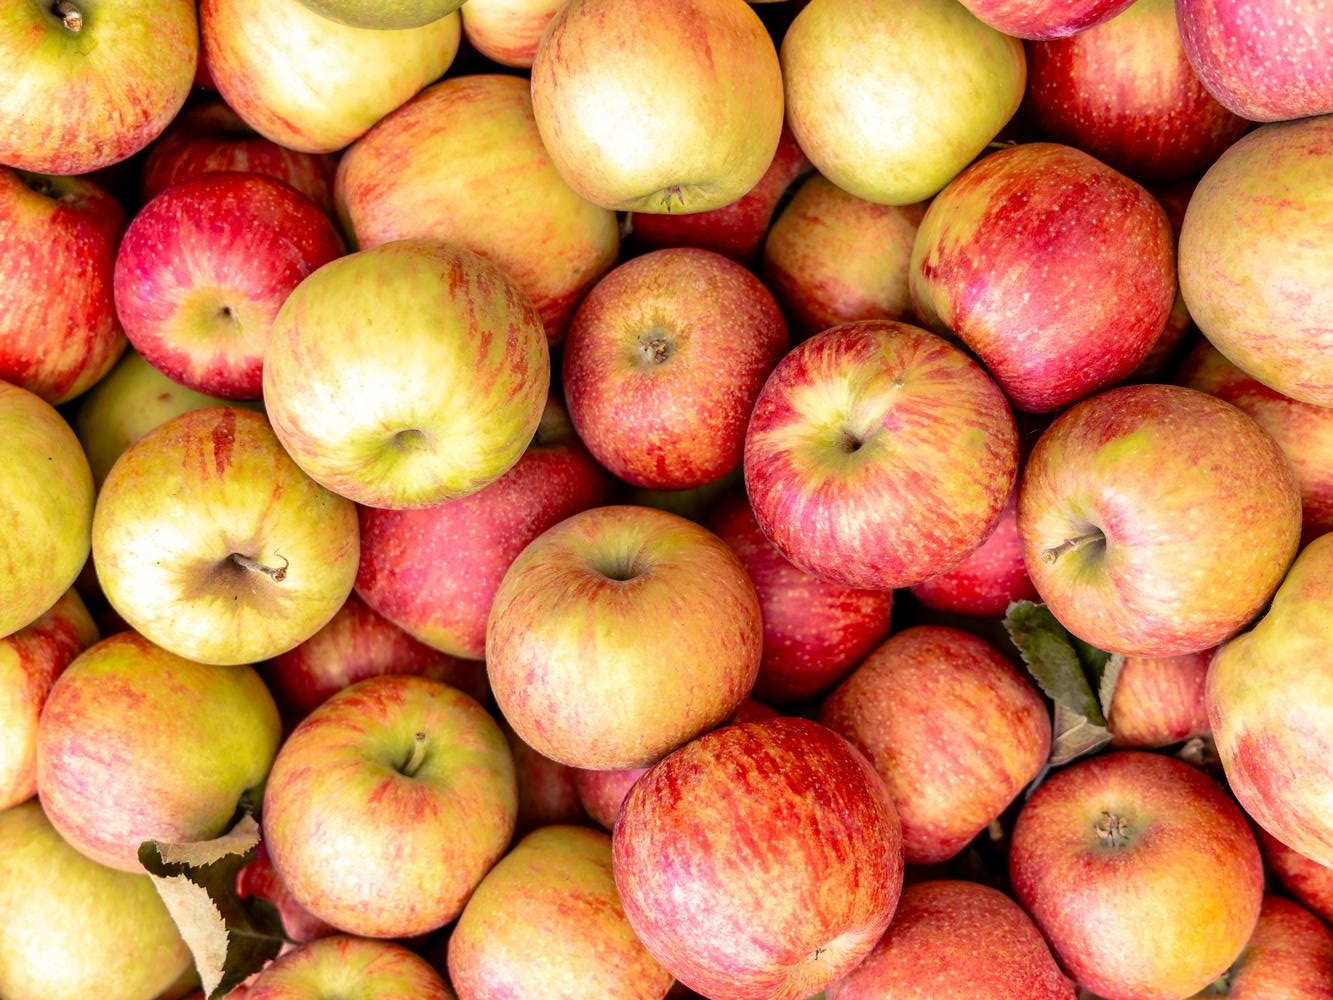 How do apples grow in California?